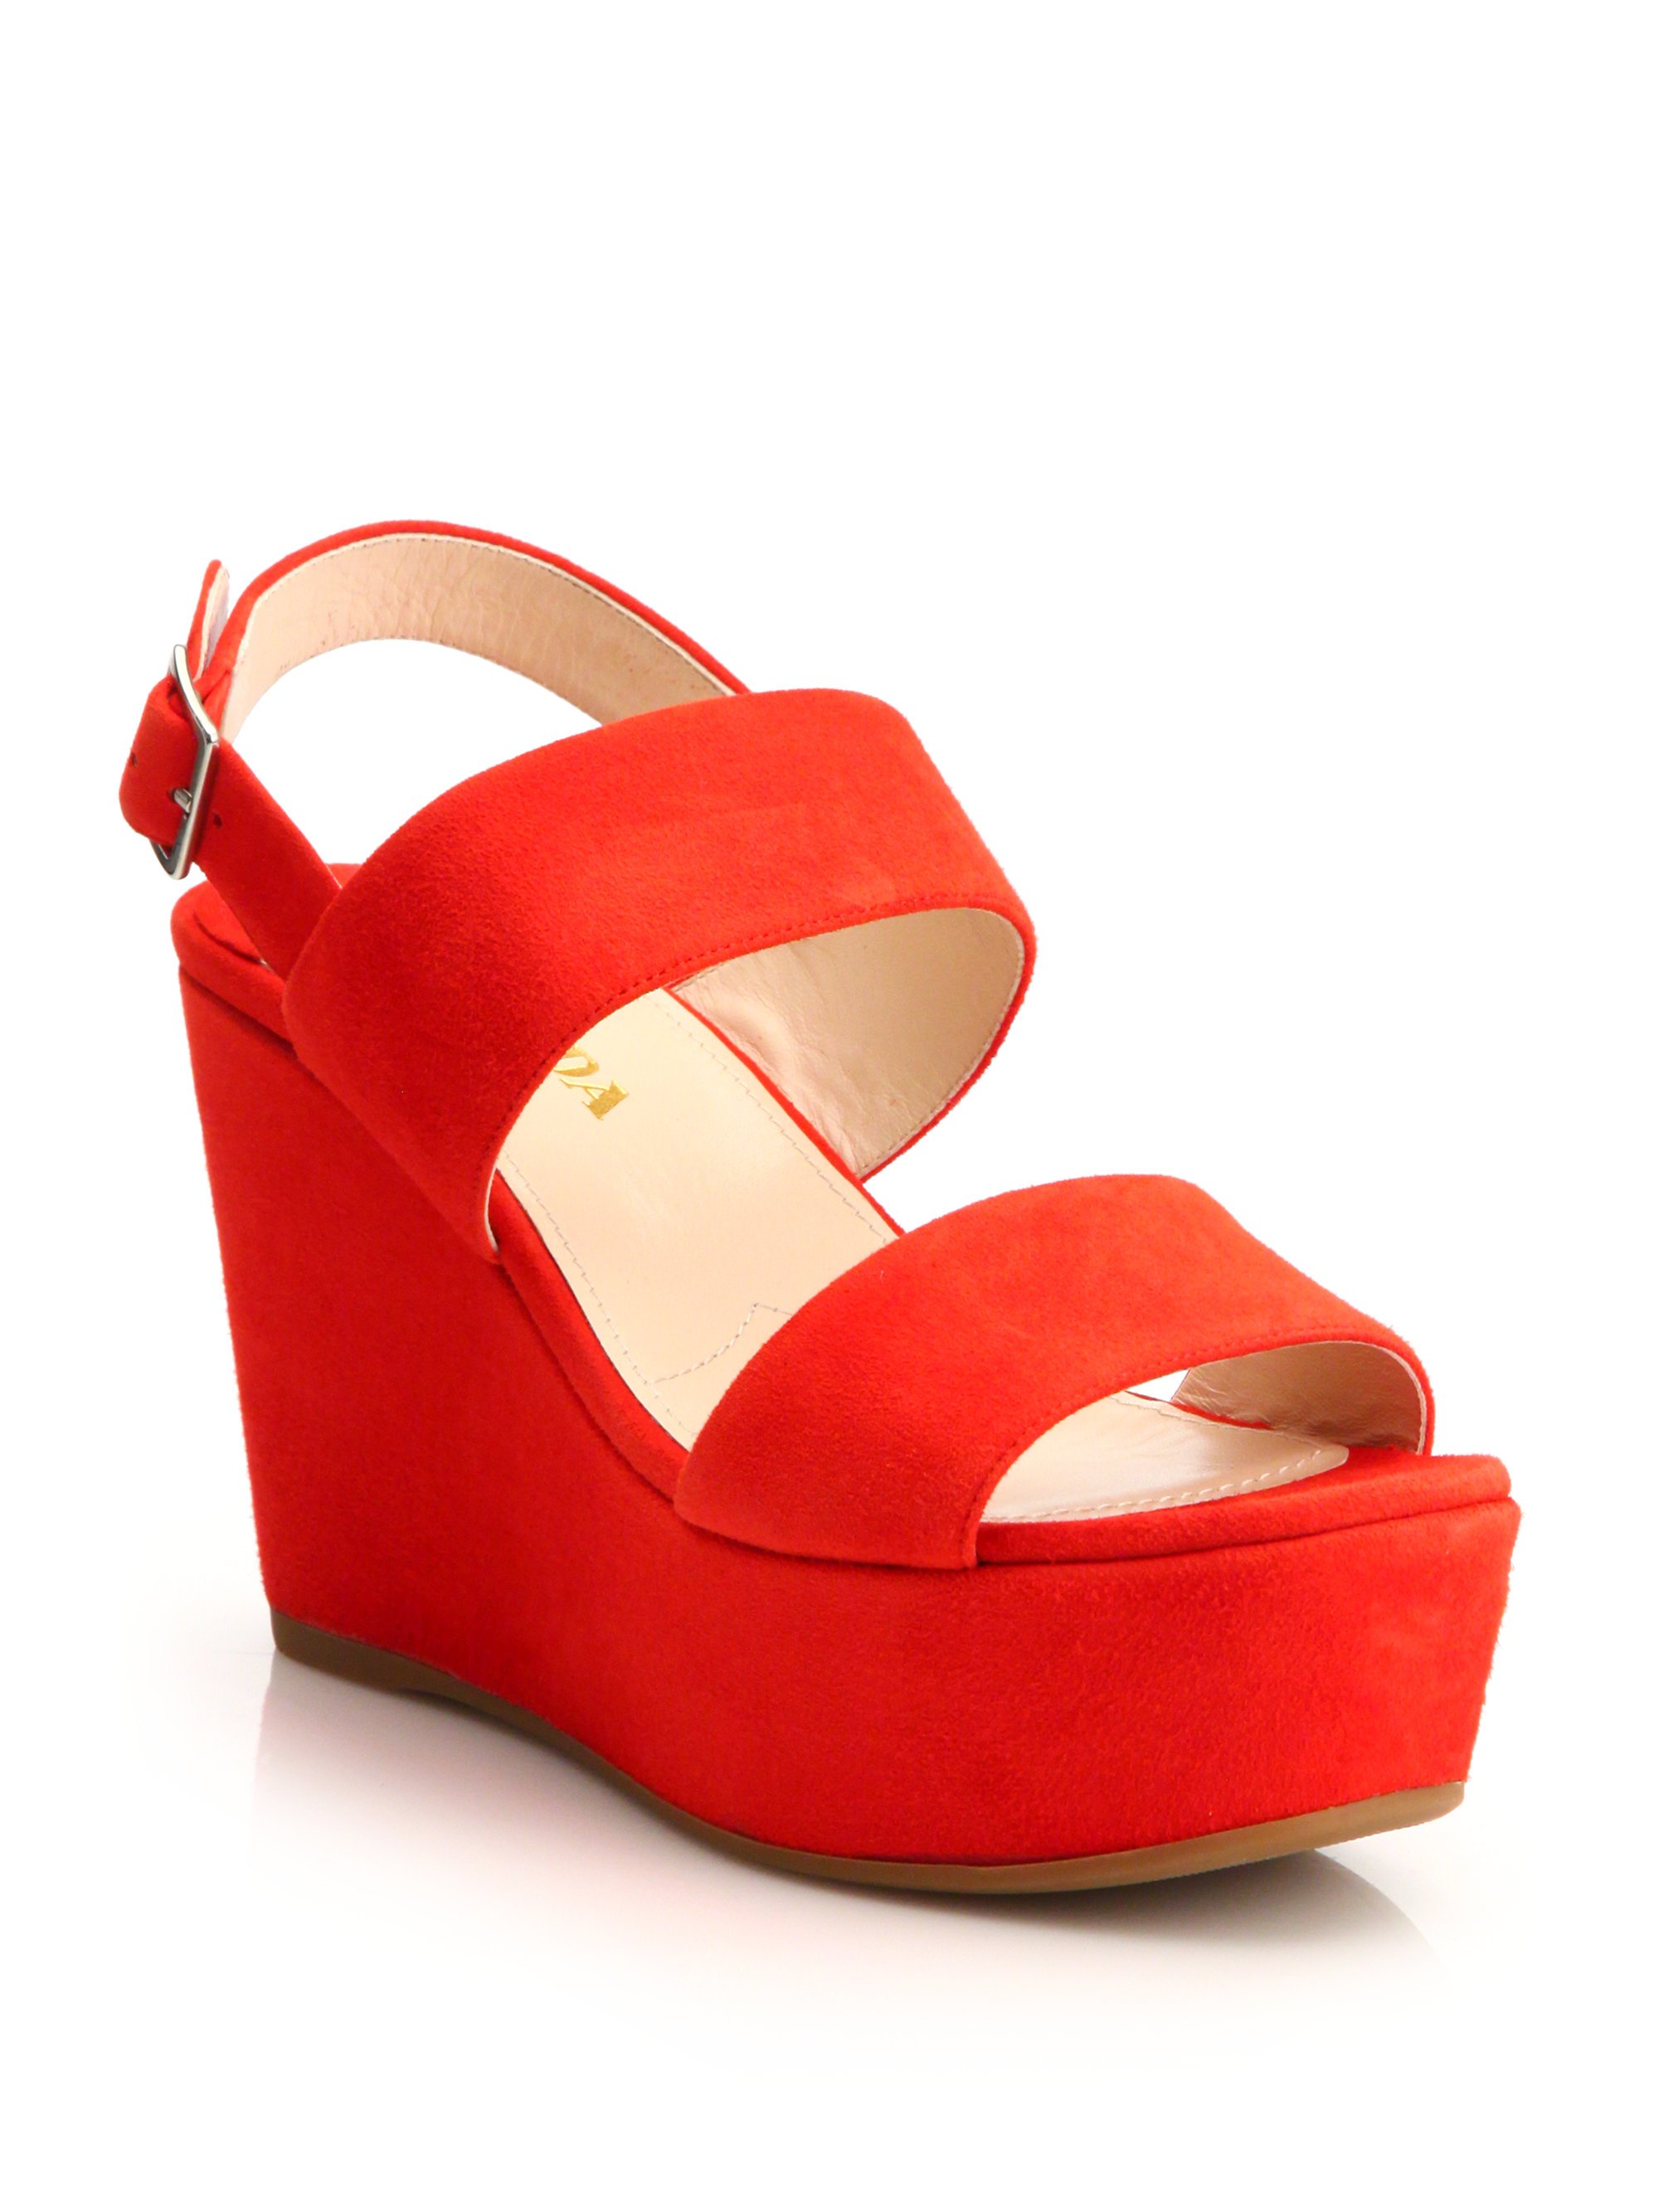 prada red platform sandals